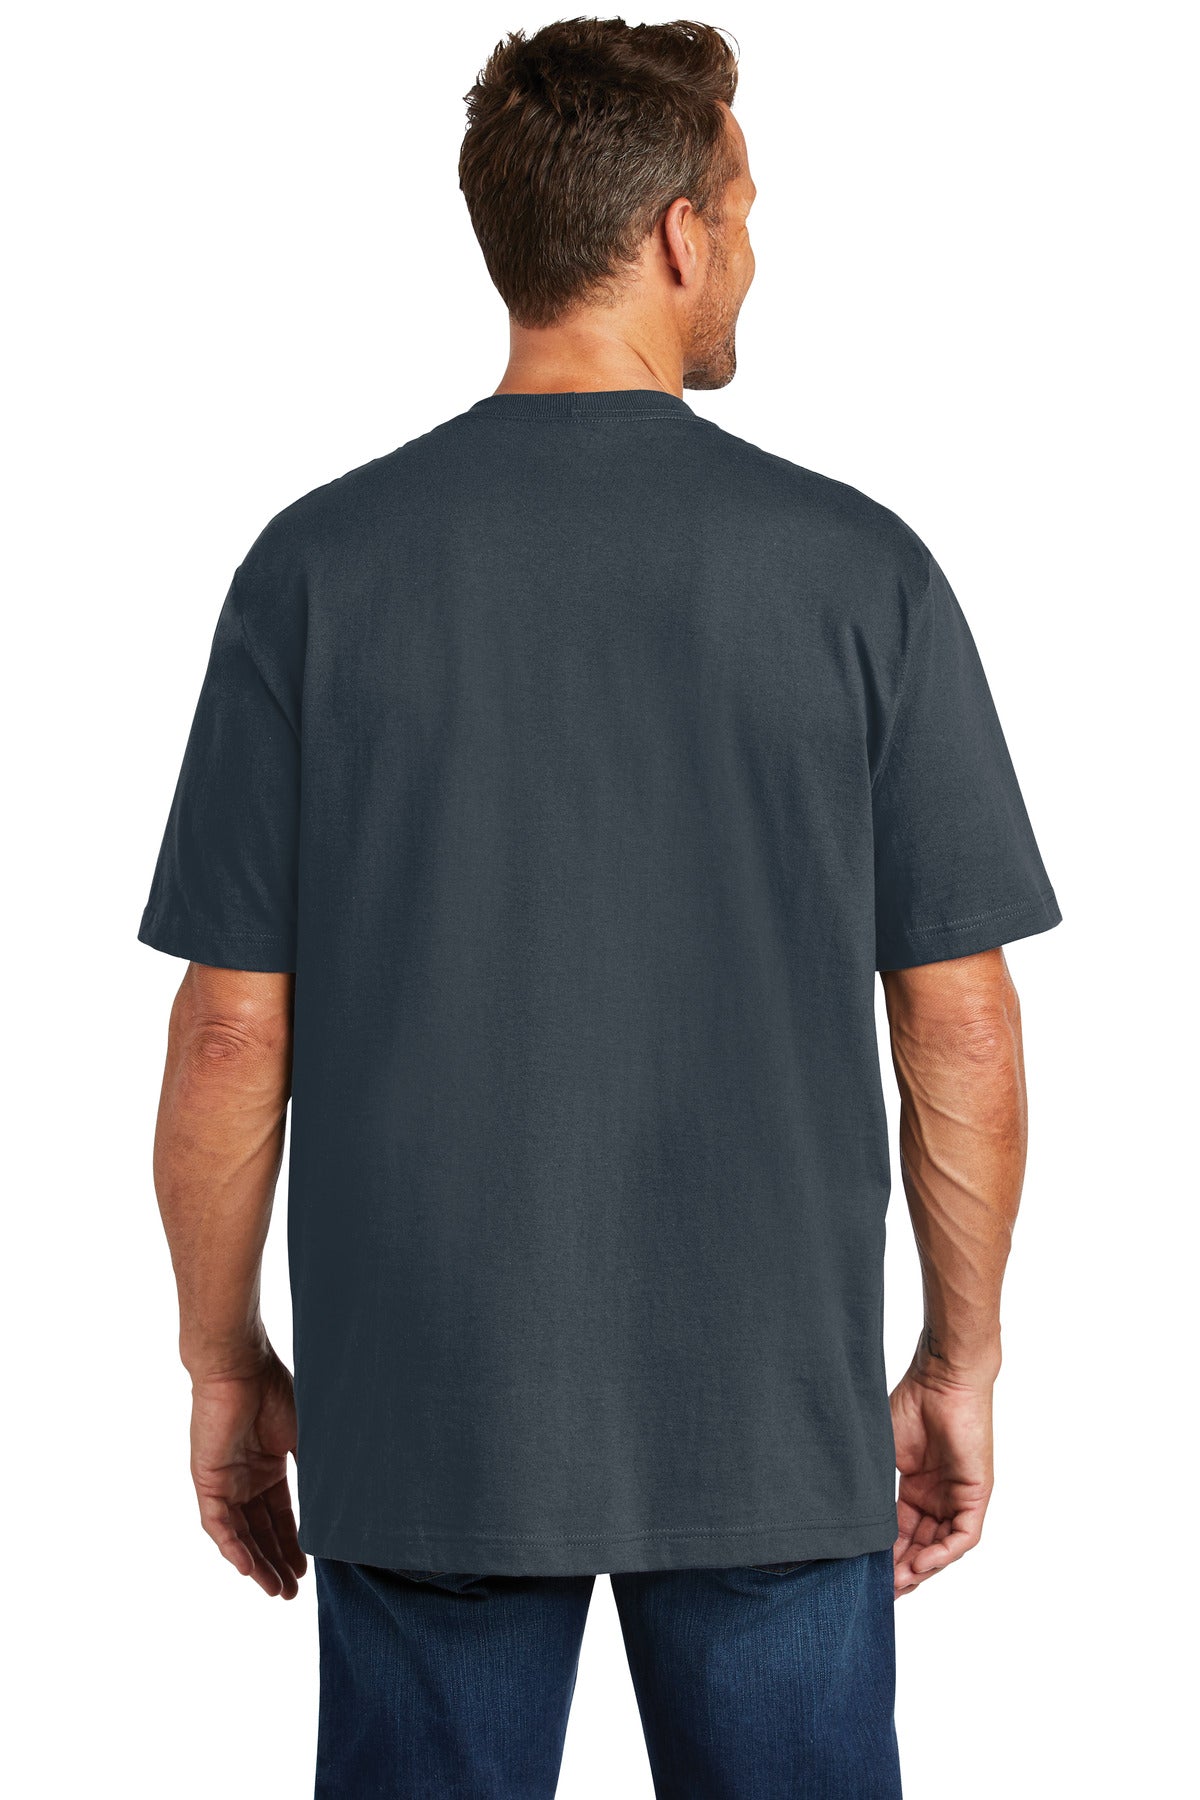 Swaasi Core - Carhartt® TALL Workwear Pocket Short Sleeve T-Shirt with EMB Logo